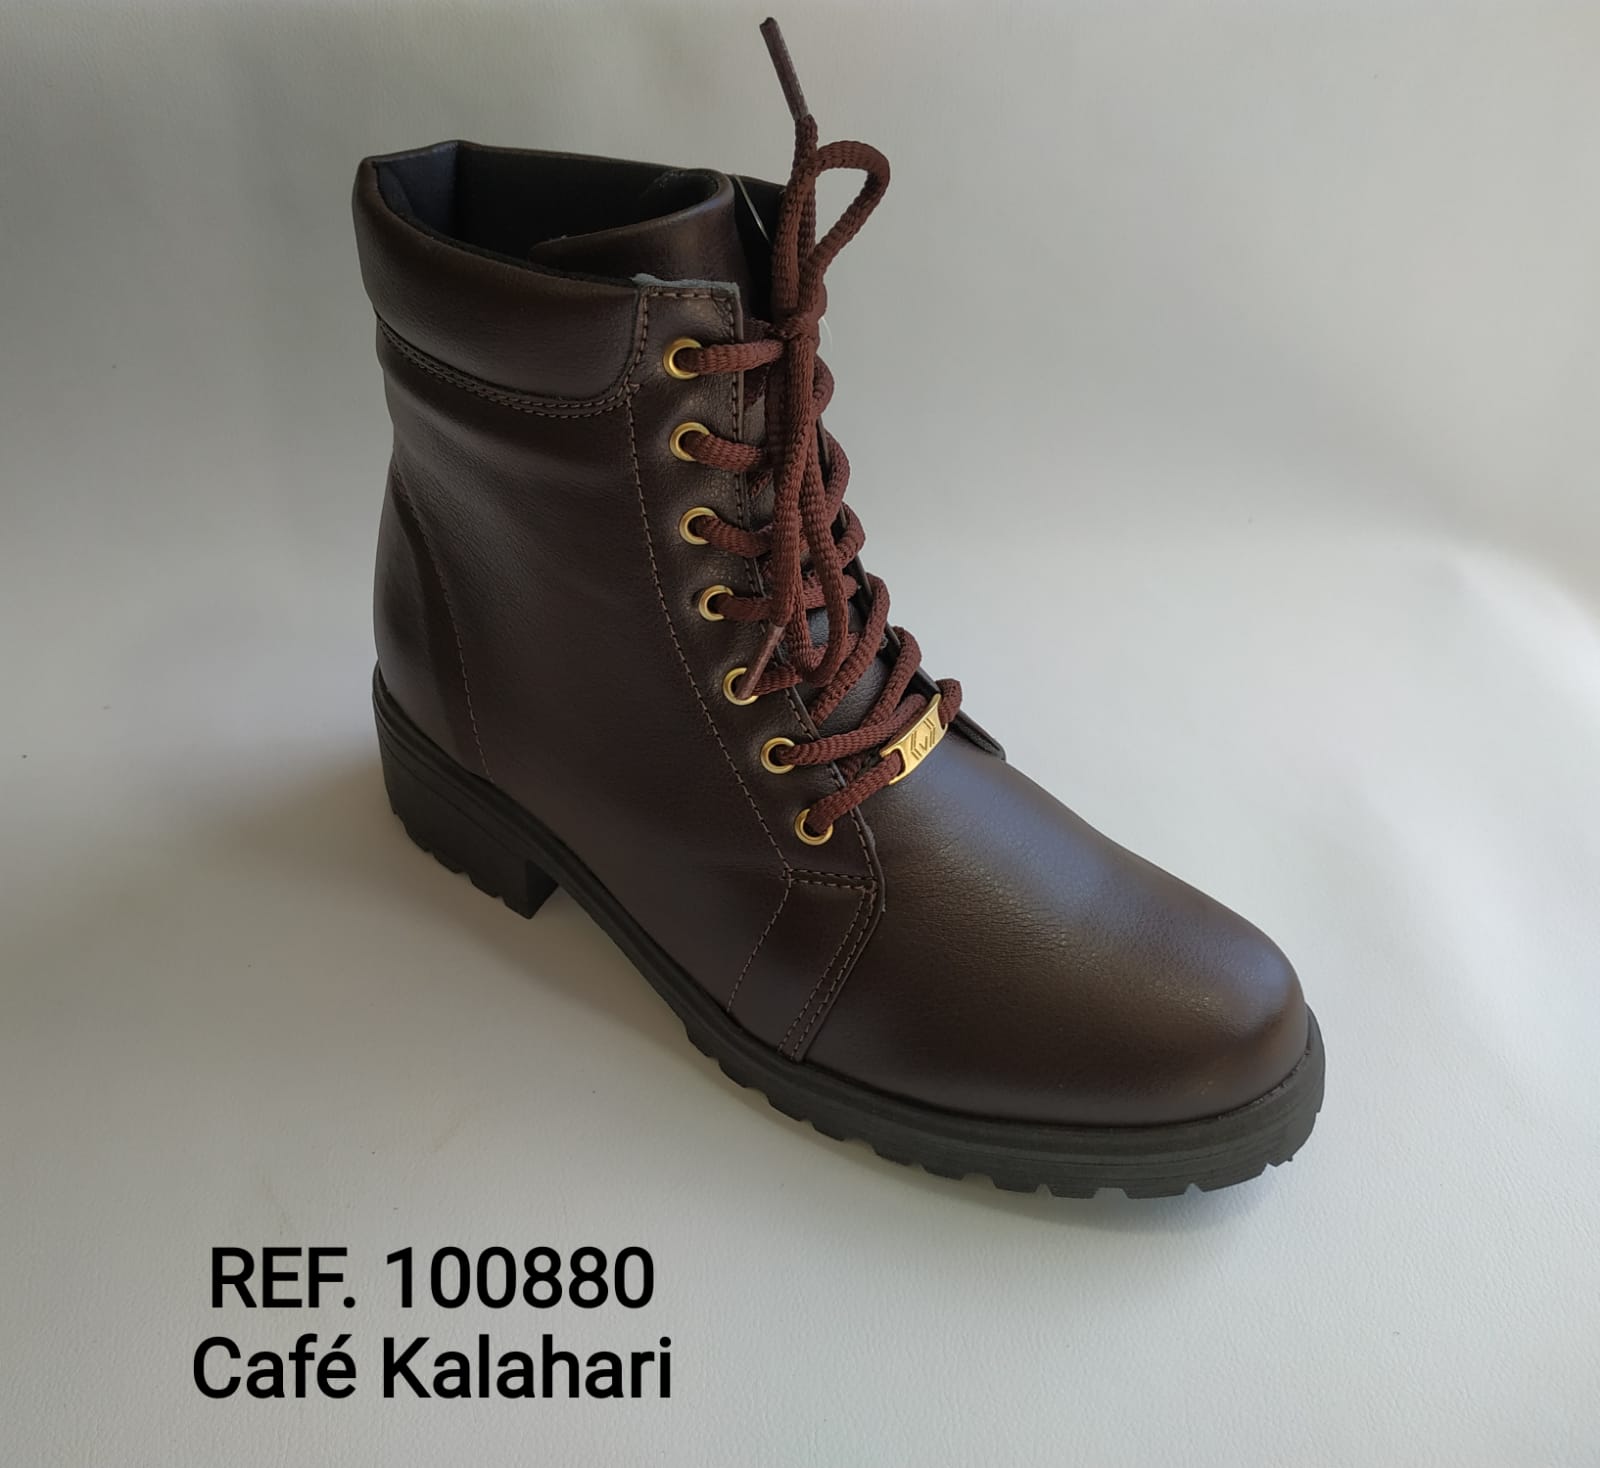 Ref. 100880 Café Kalahari